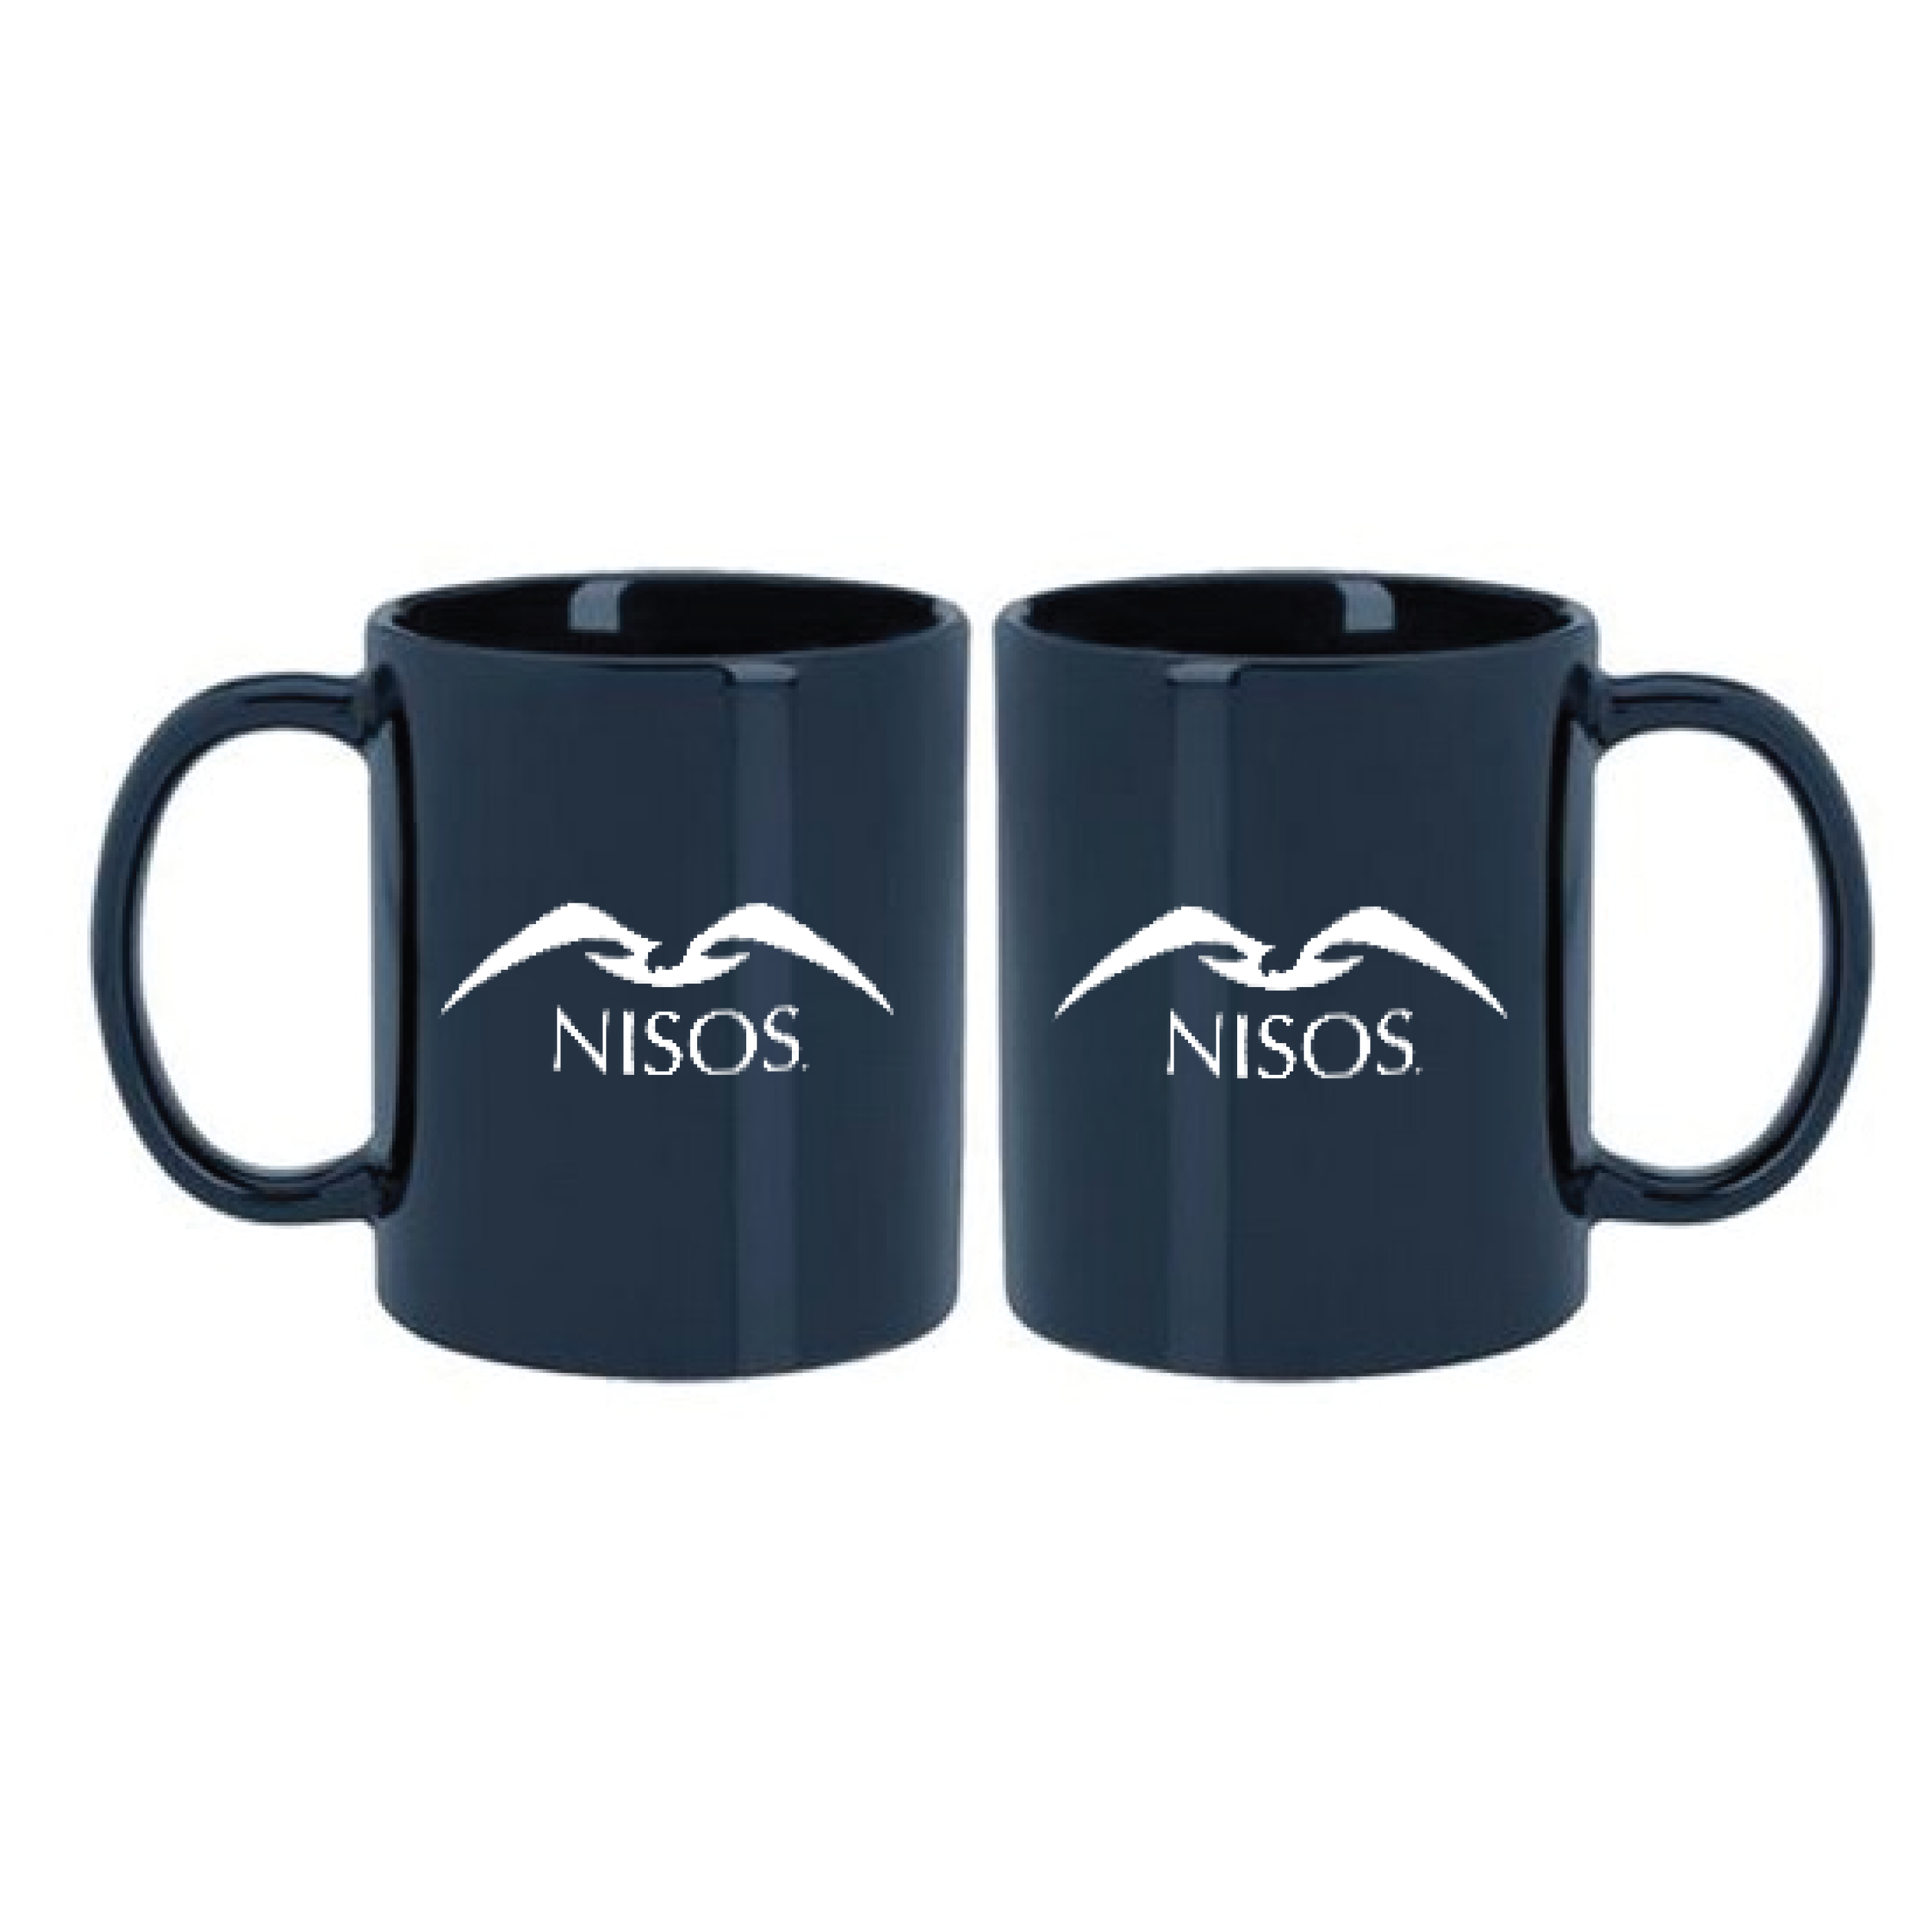 Nisos Coffee Mug in Cobalt